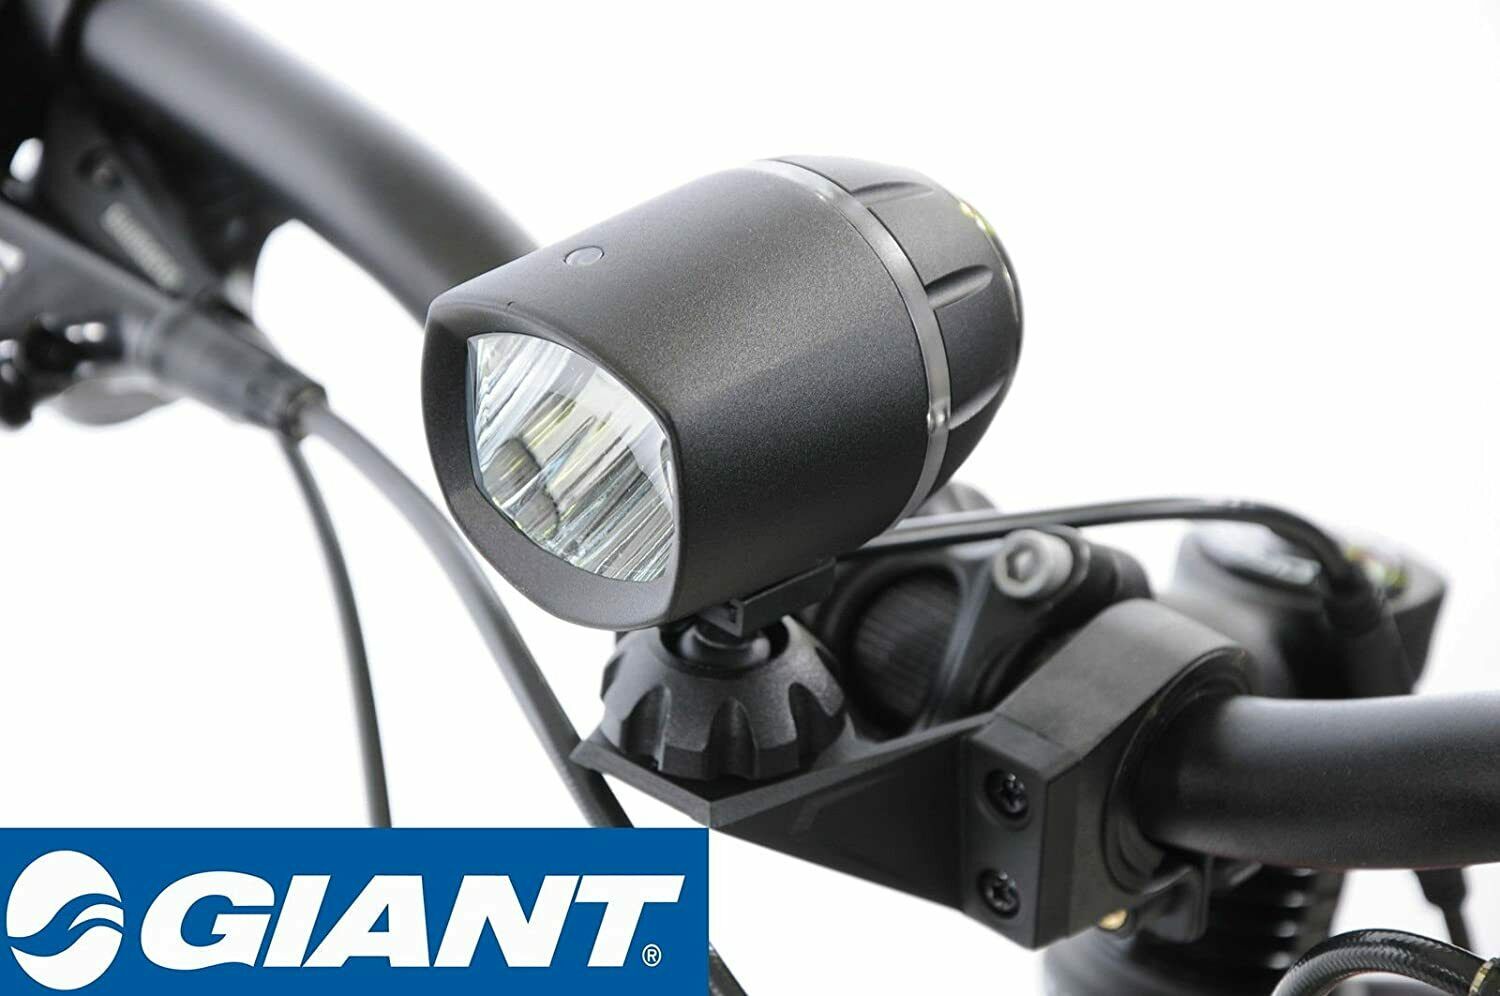 Giant Recon Pro Front Bike Light / Headlight - 250 Lumen - Rechargeable - Sportandleisure.com (6968134729882)